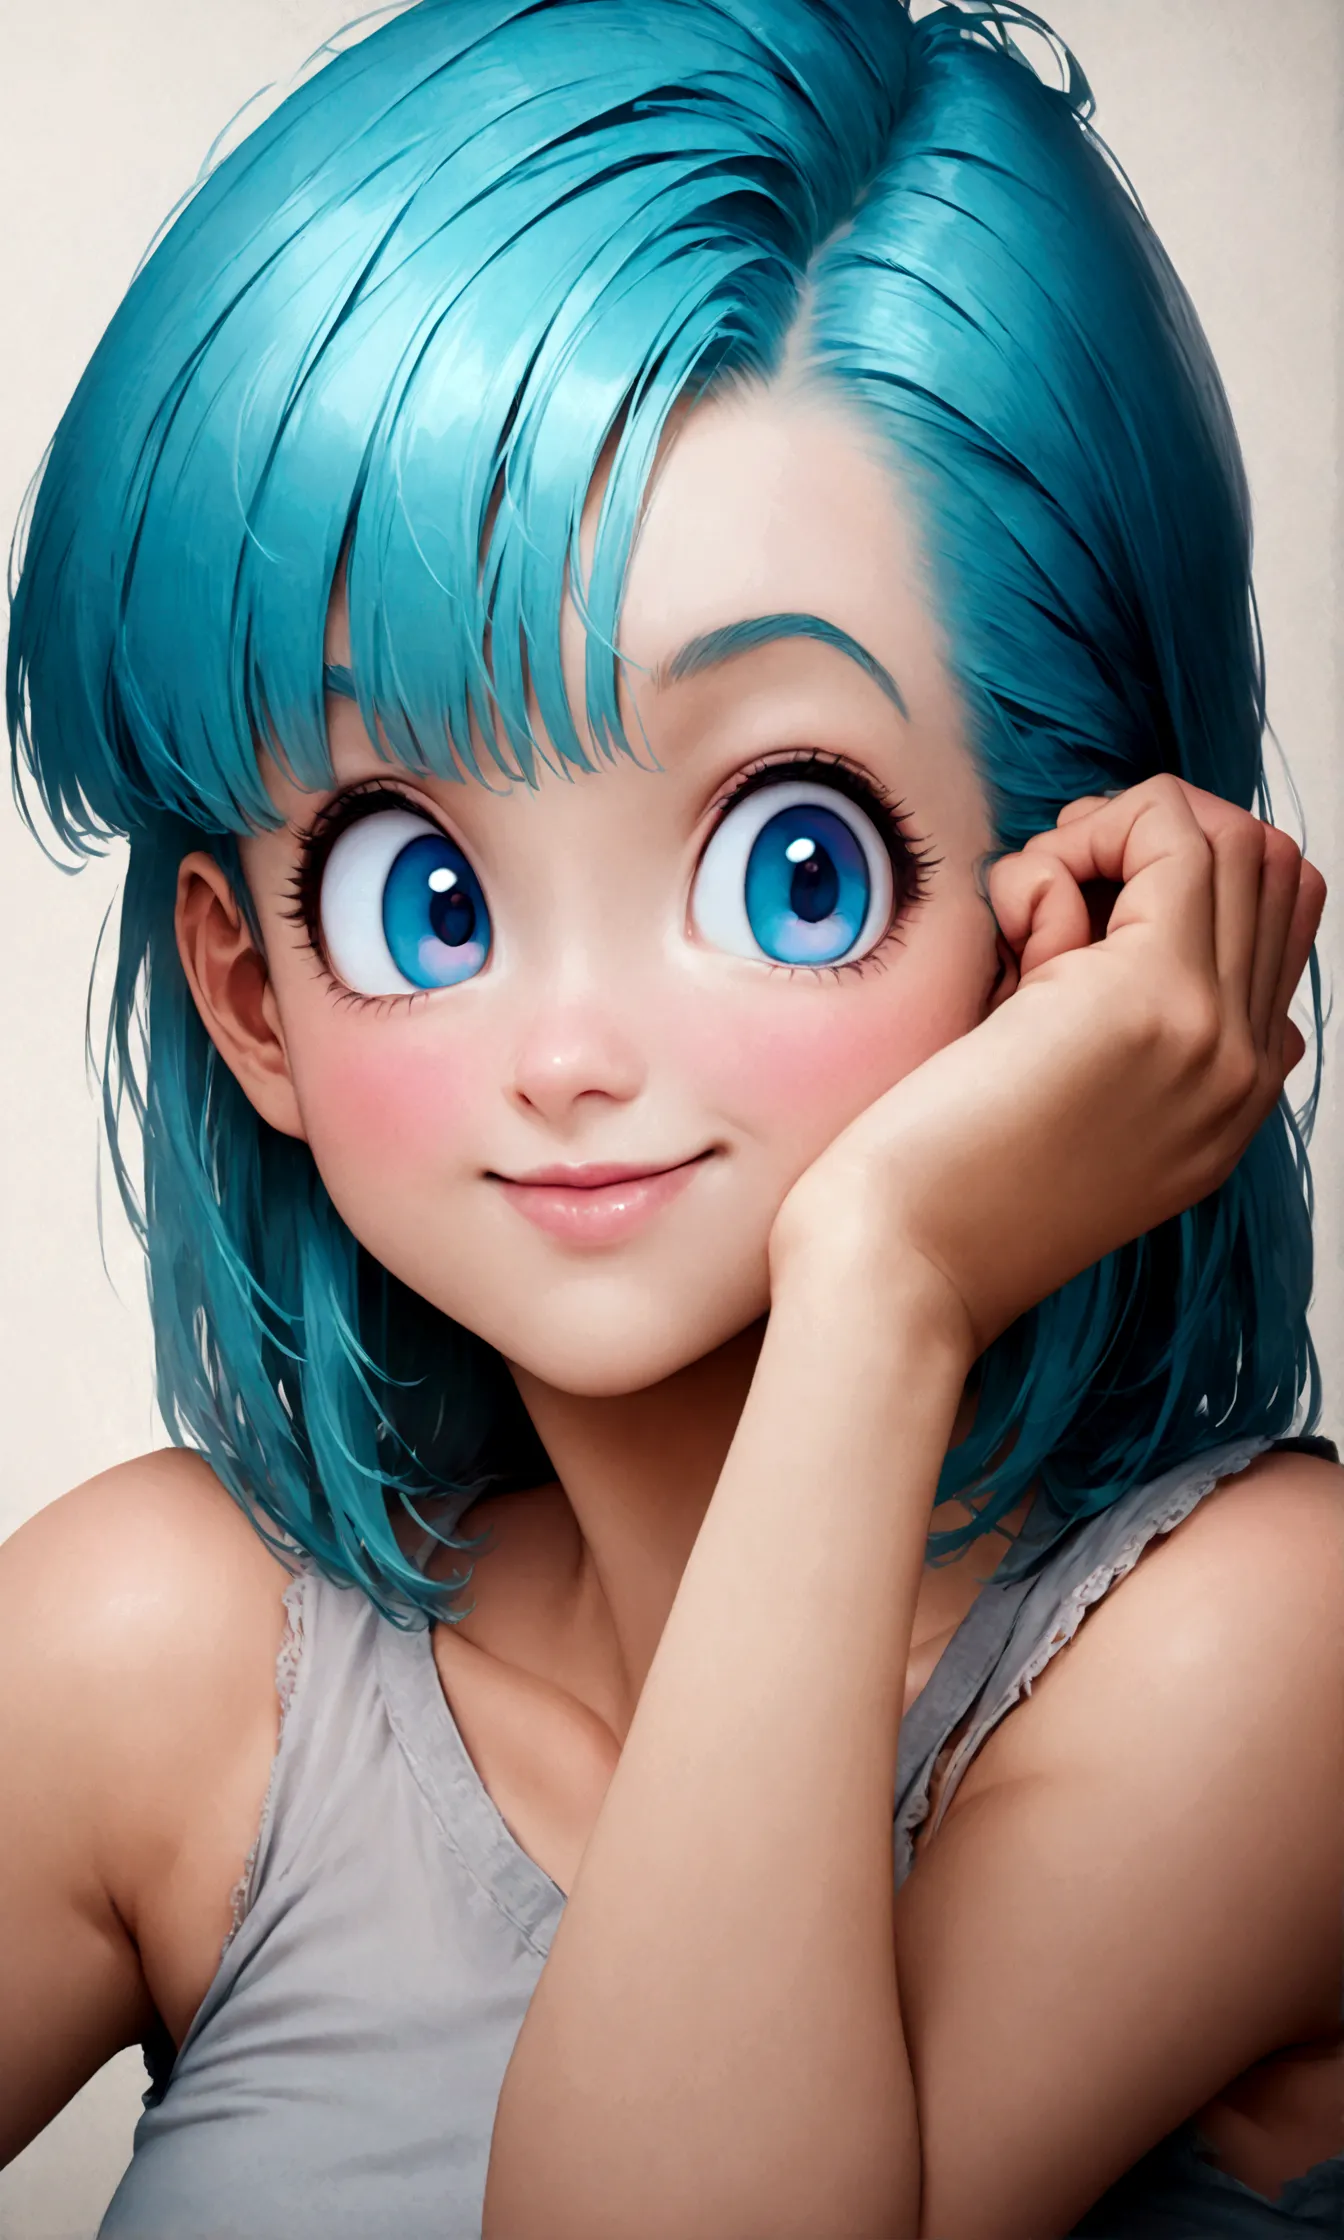 (1 female,bulma, blue eyes, blue hair),akira toriyama style,Dragon Ball,cute,,Intricate details,POP Illustration,Wide range of c...